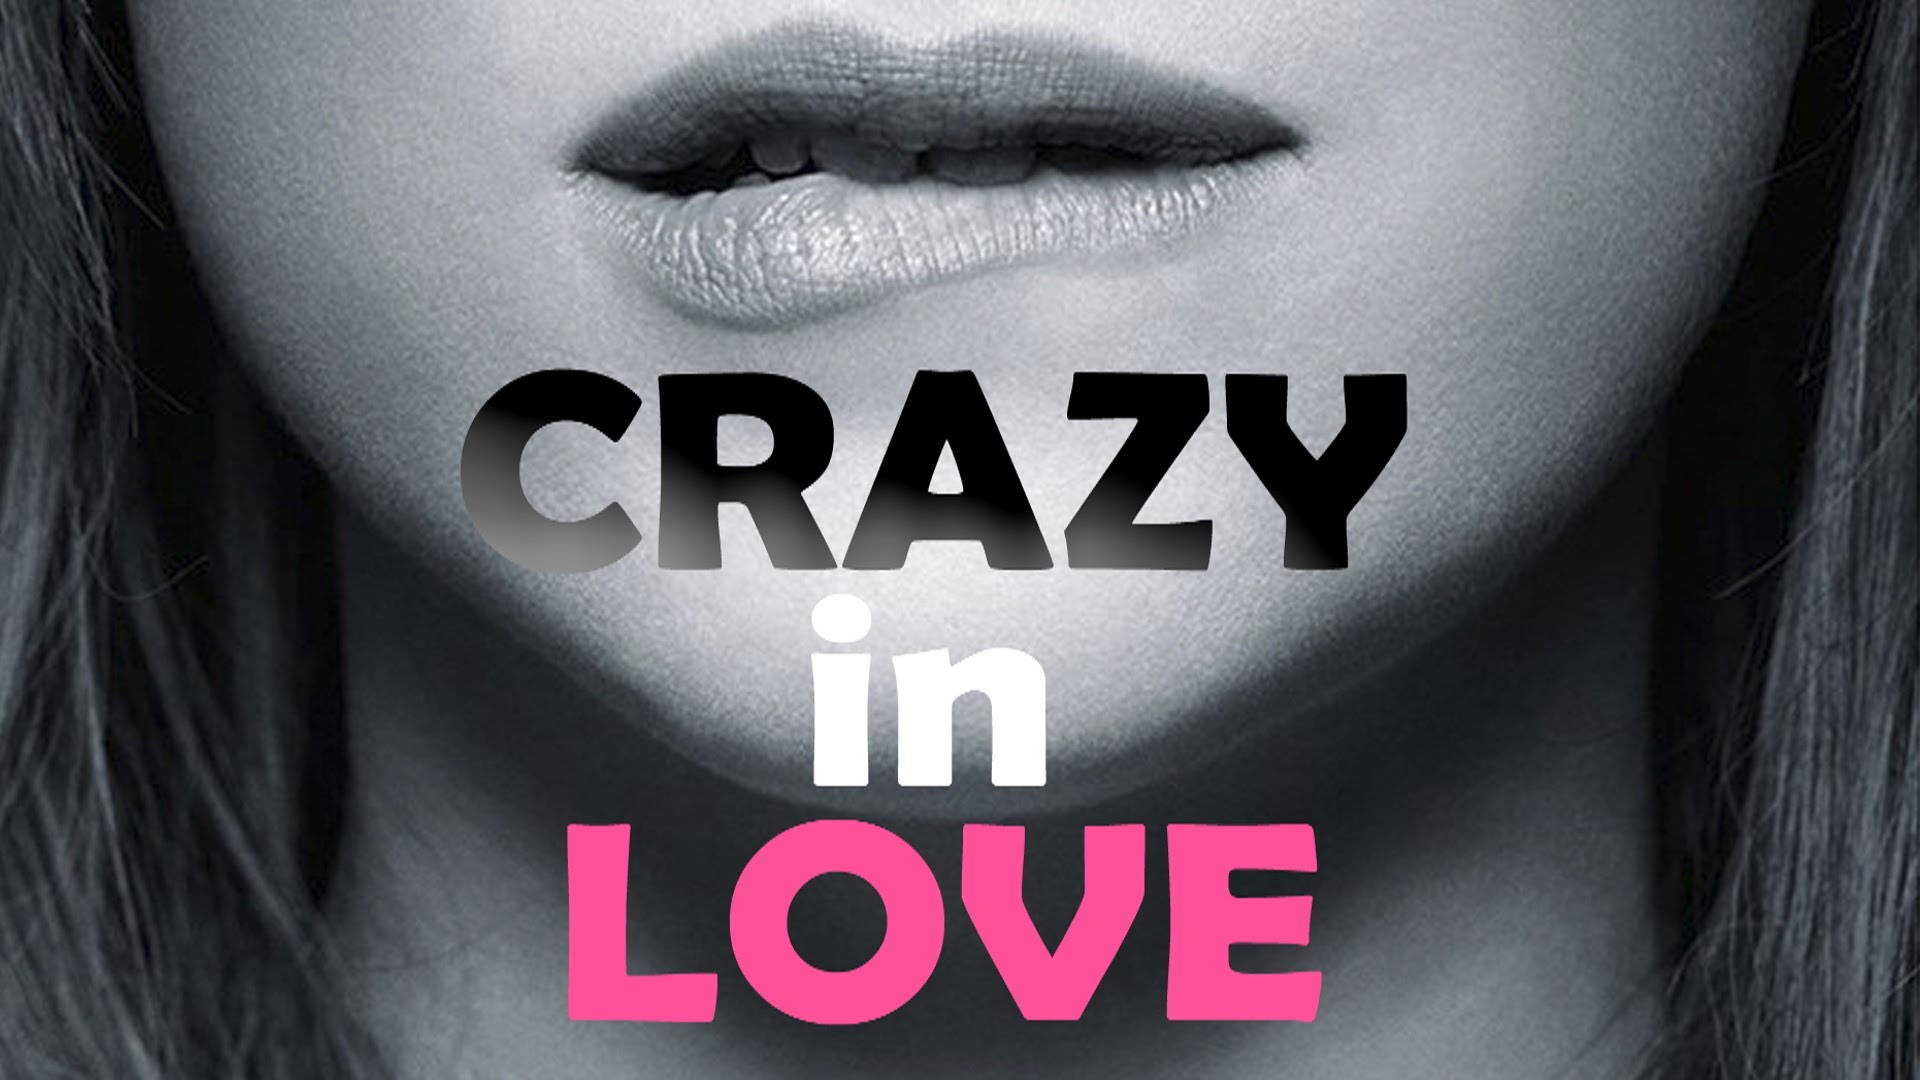 Crazy love baby. Crazy in Love обложка. Crazy in Love Beyonce обложка. Beyonce, Jay-z - Crazy in Love обложка. Crazy Love.